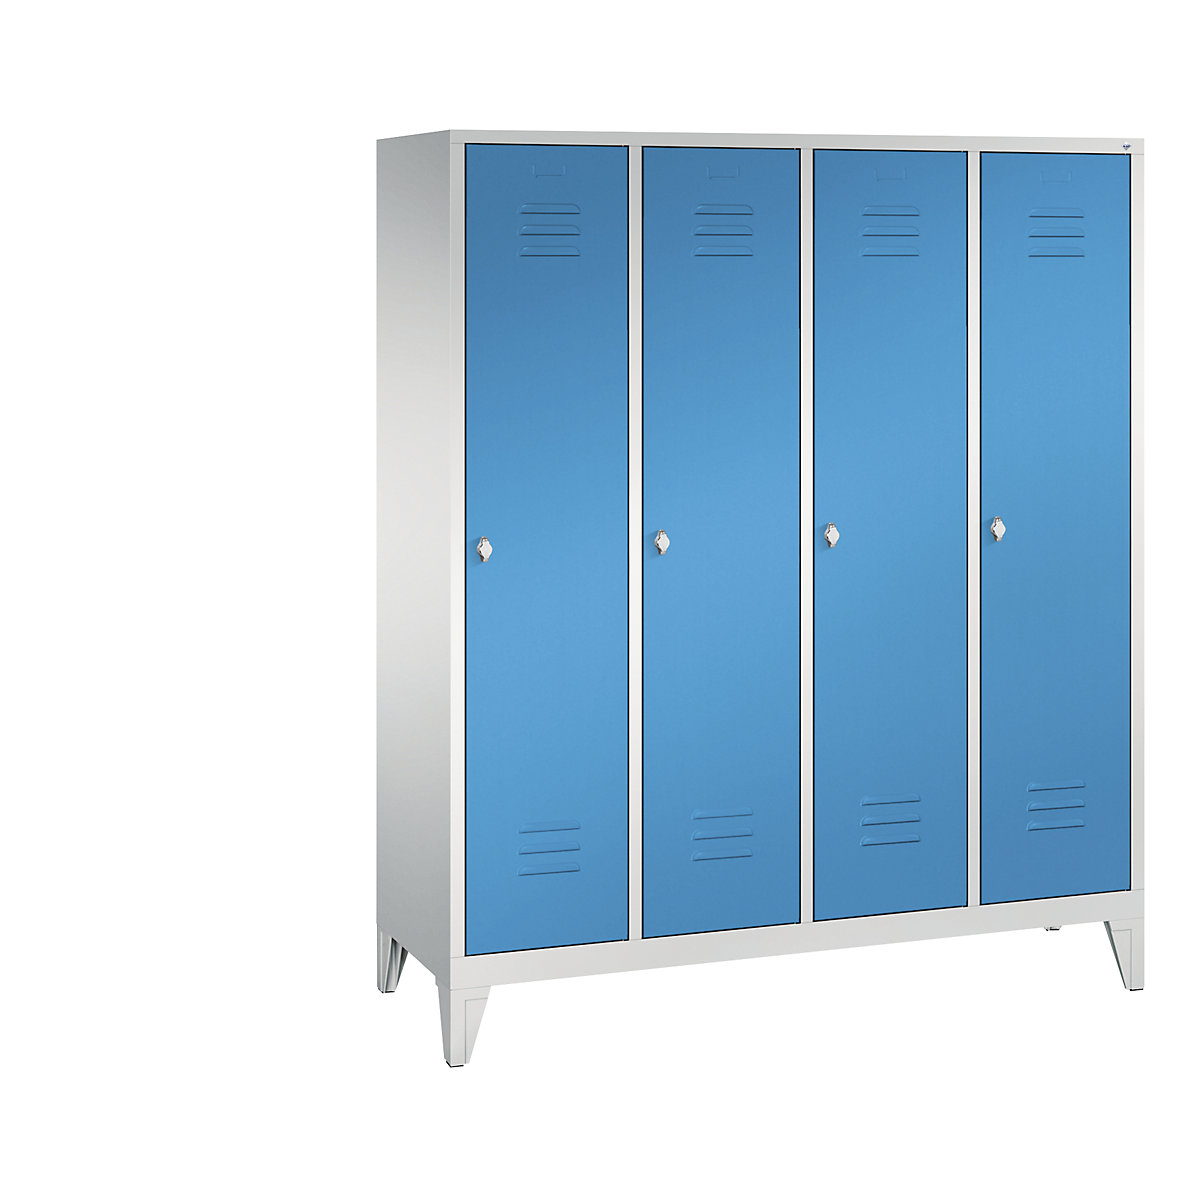 CLASSIC cloakroom locker with feet – C+P